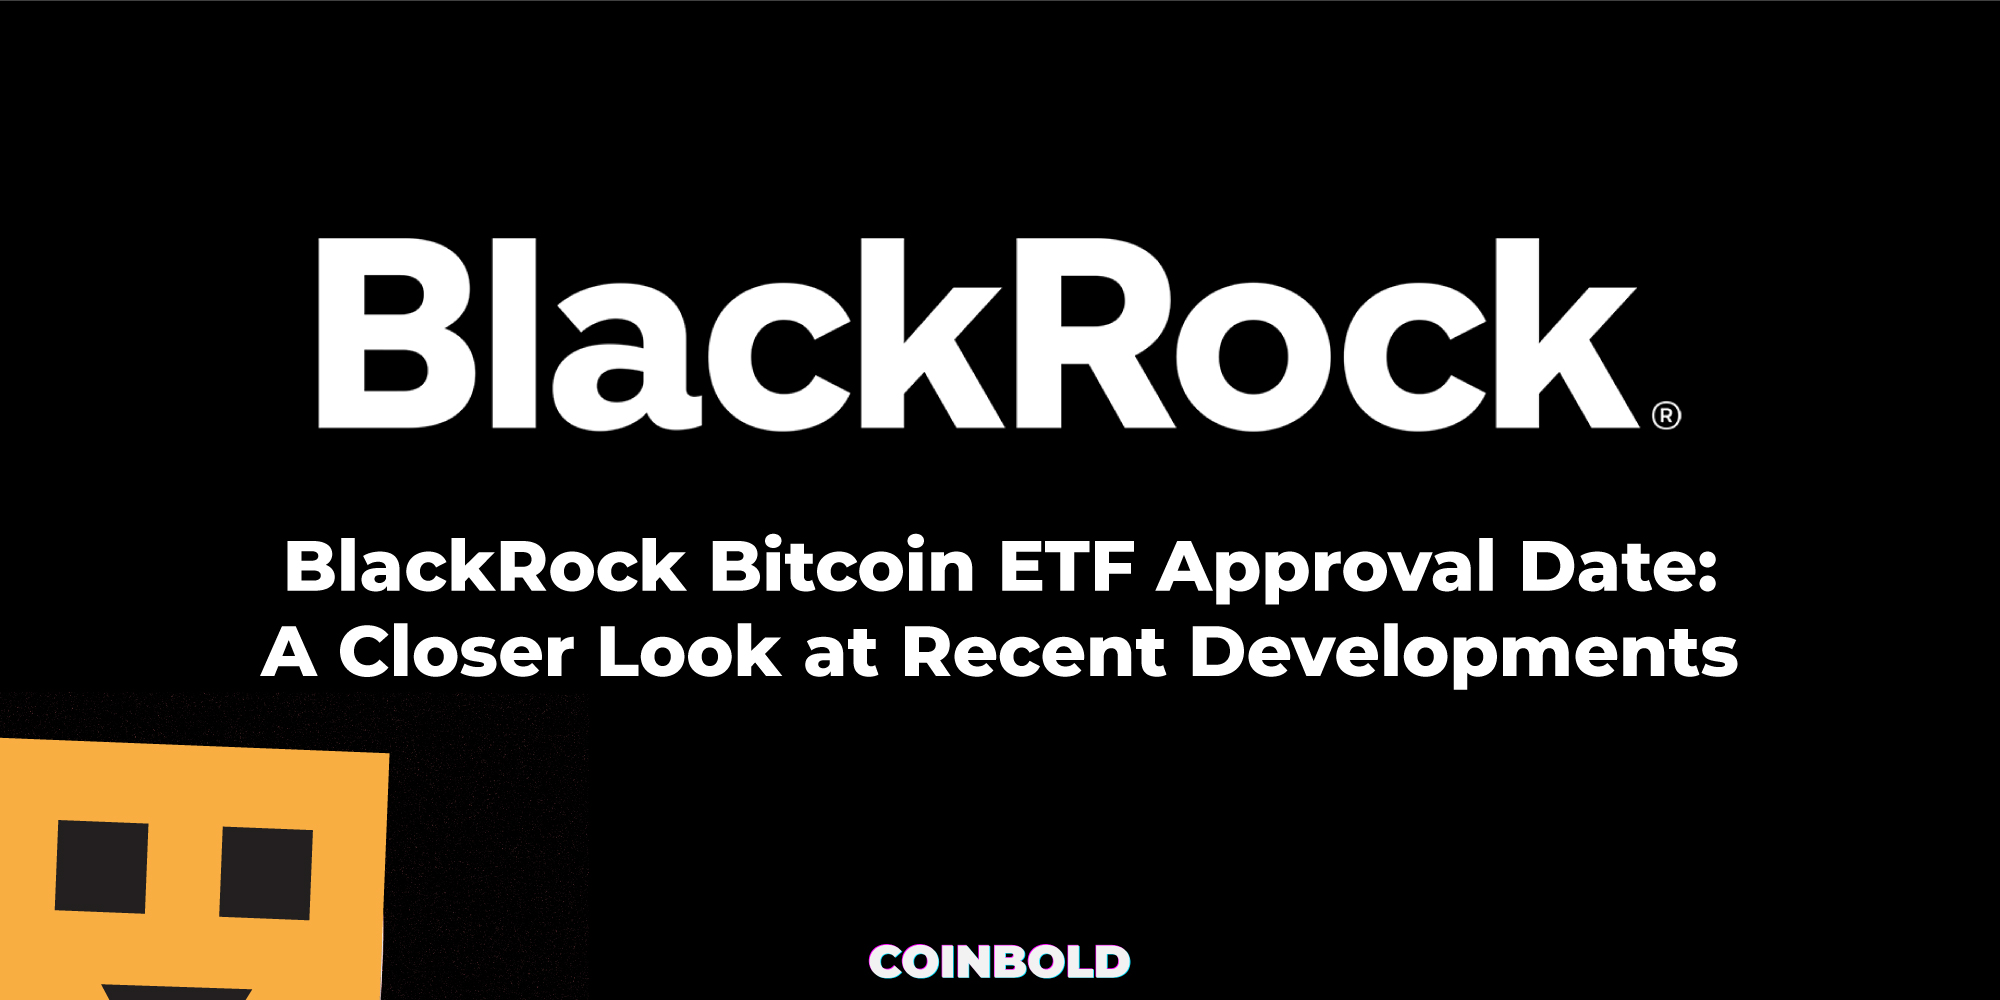 BlackRock Bitcoin ETF Approval Date: A Closer Look at Recent Developments